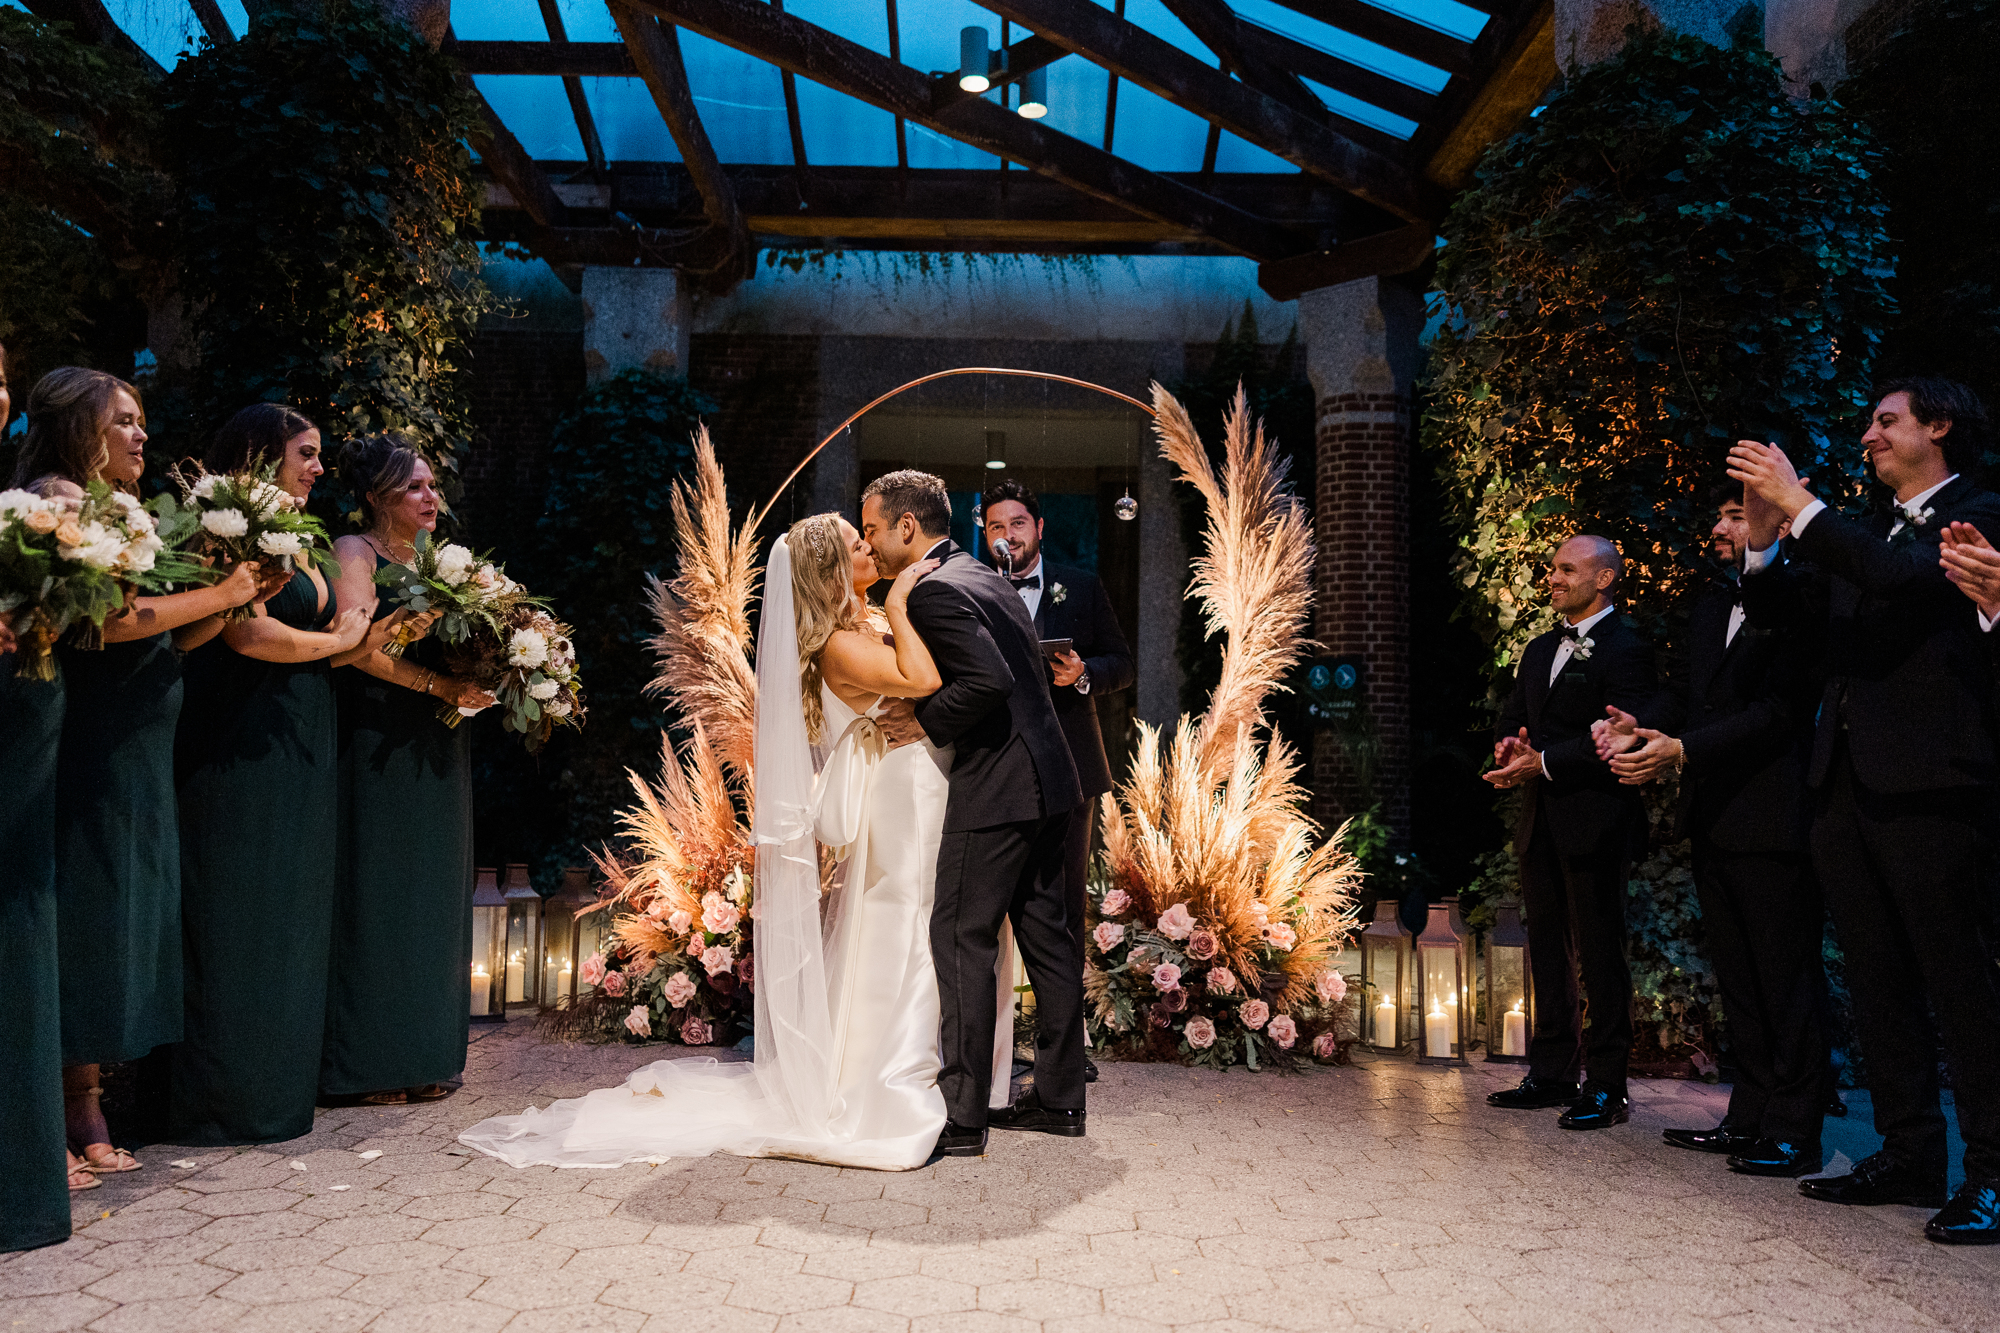 Intimate Rainy Wedding Photos at Central Park Zoo